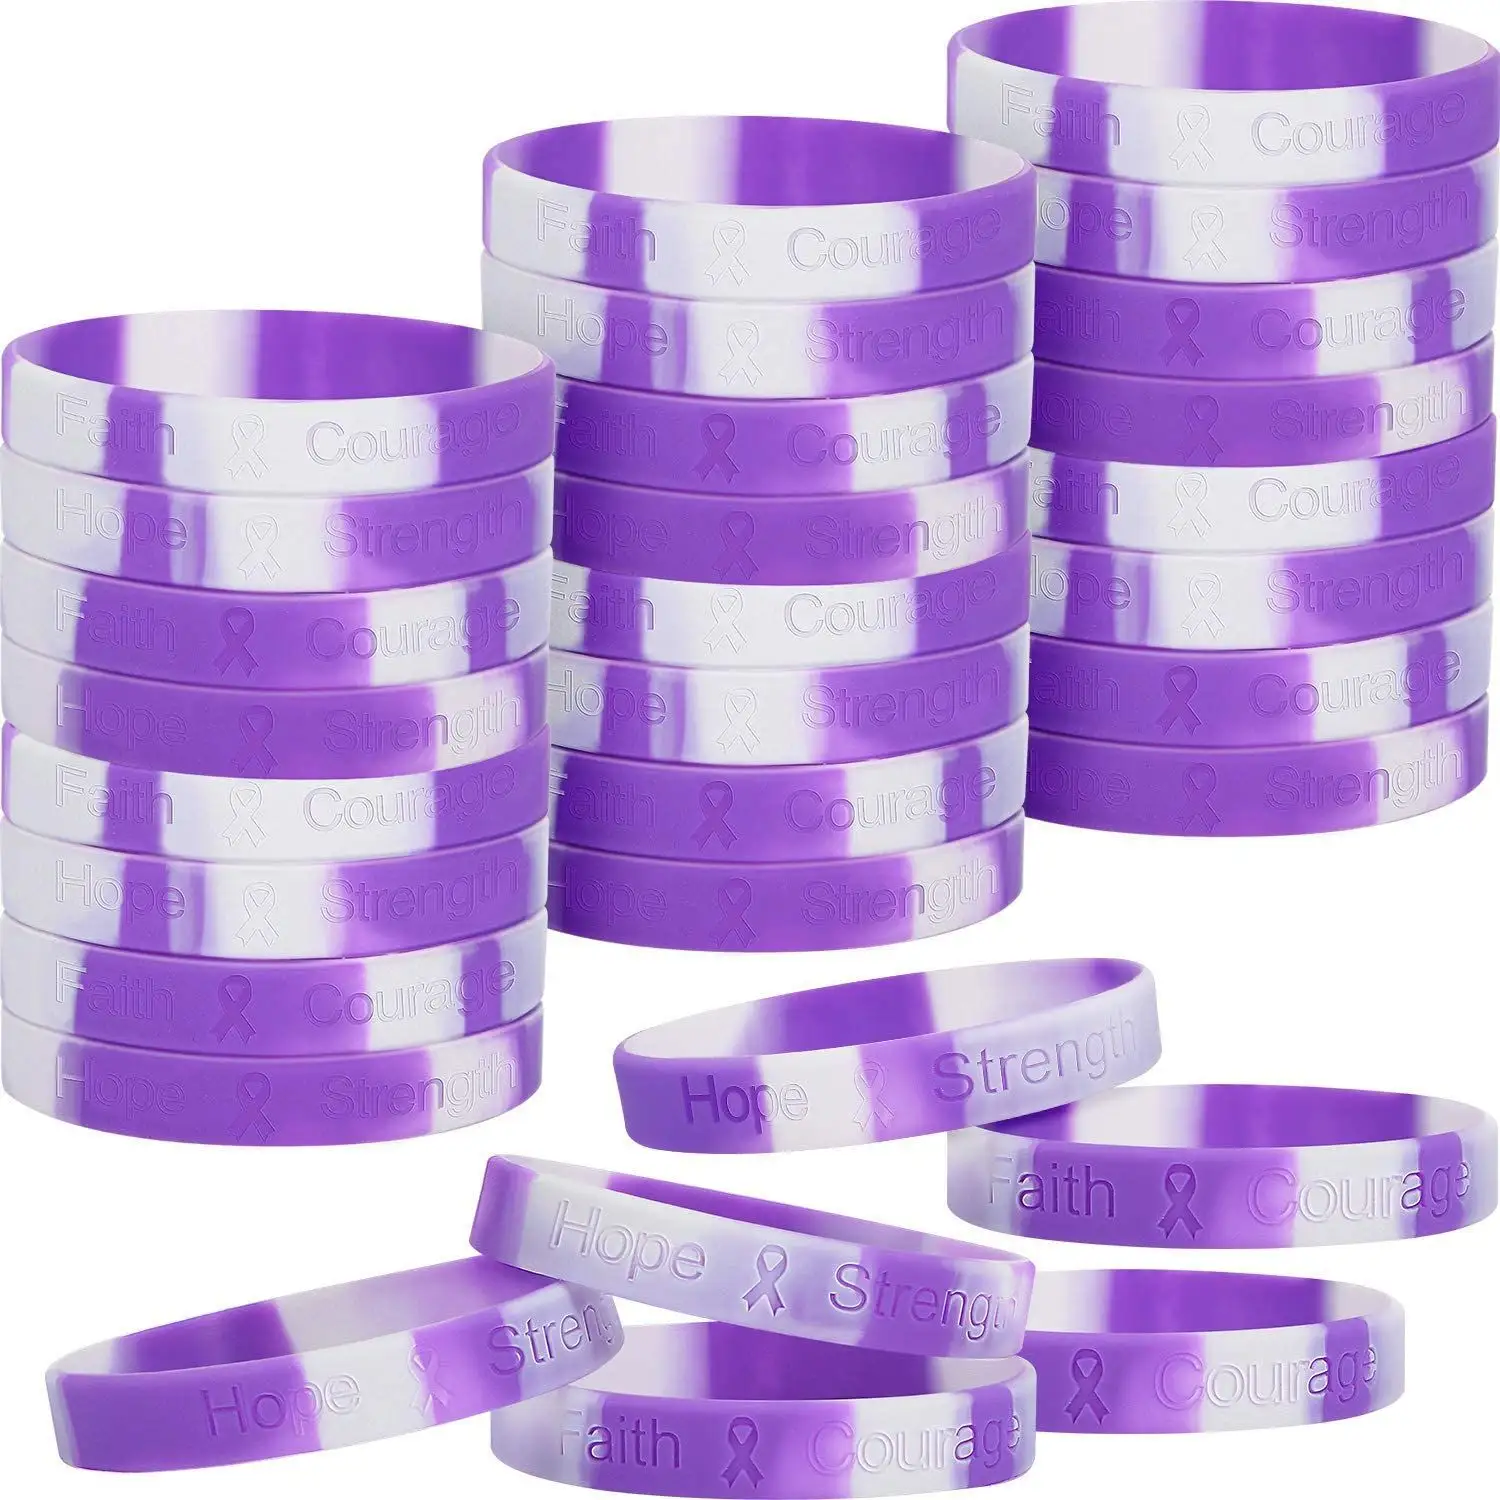 Free Sample Low Moq Custom Silicone Wrist Band Wristbands Rubber Silicone Custom Mens Bracelets Women